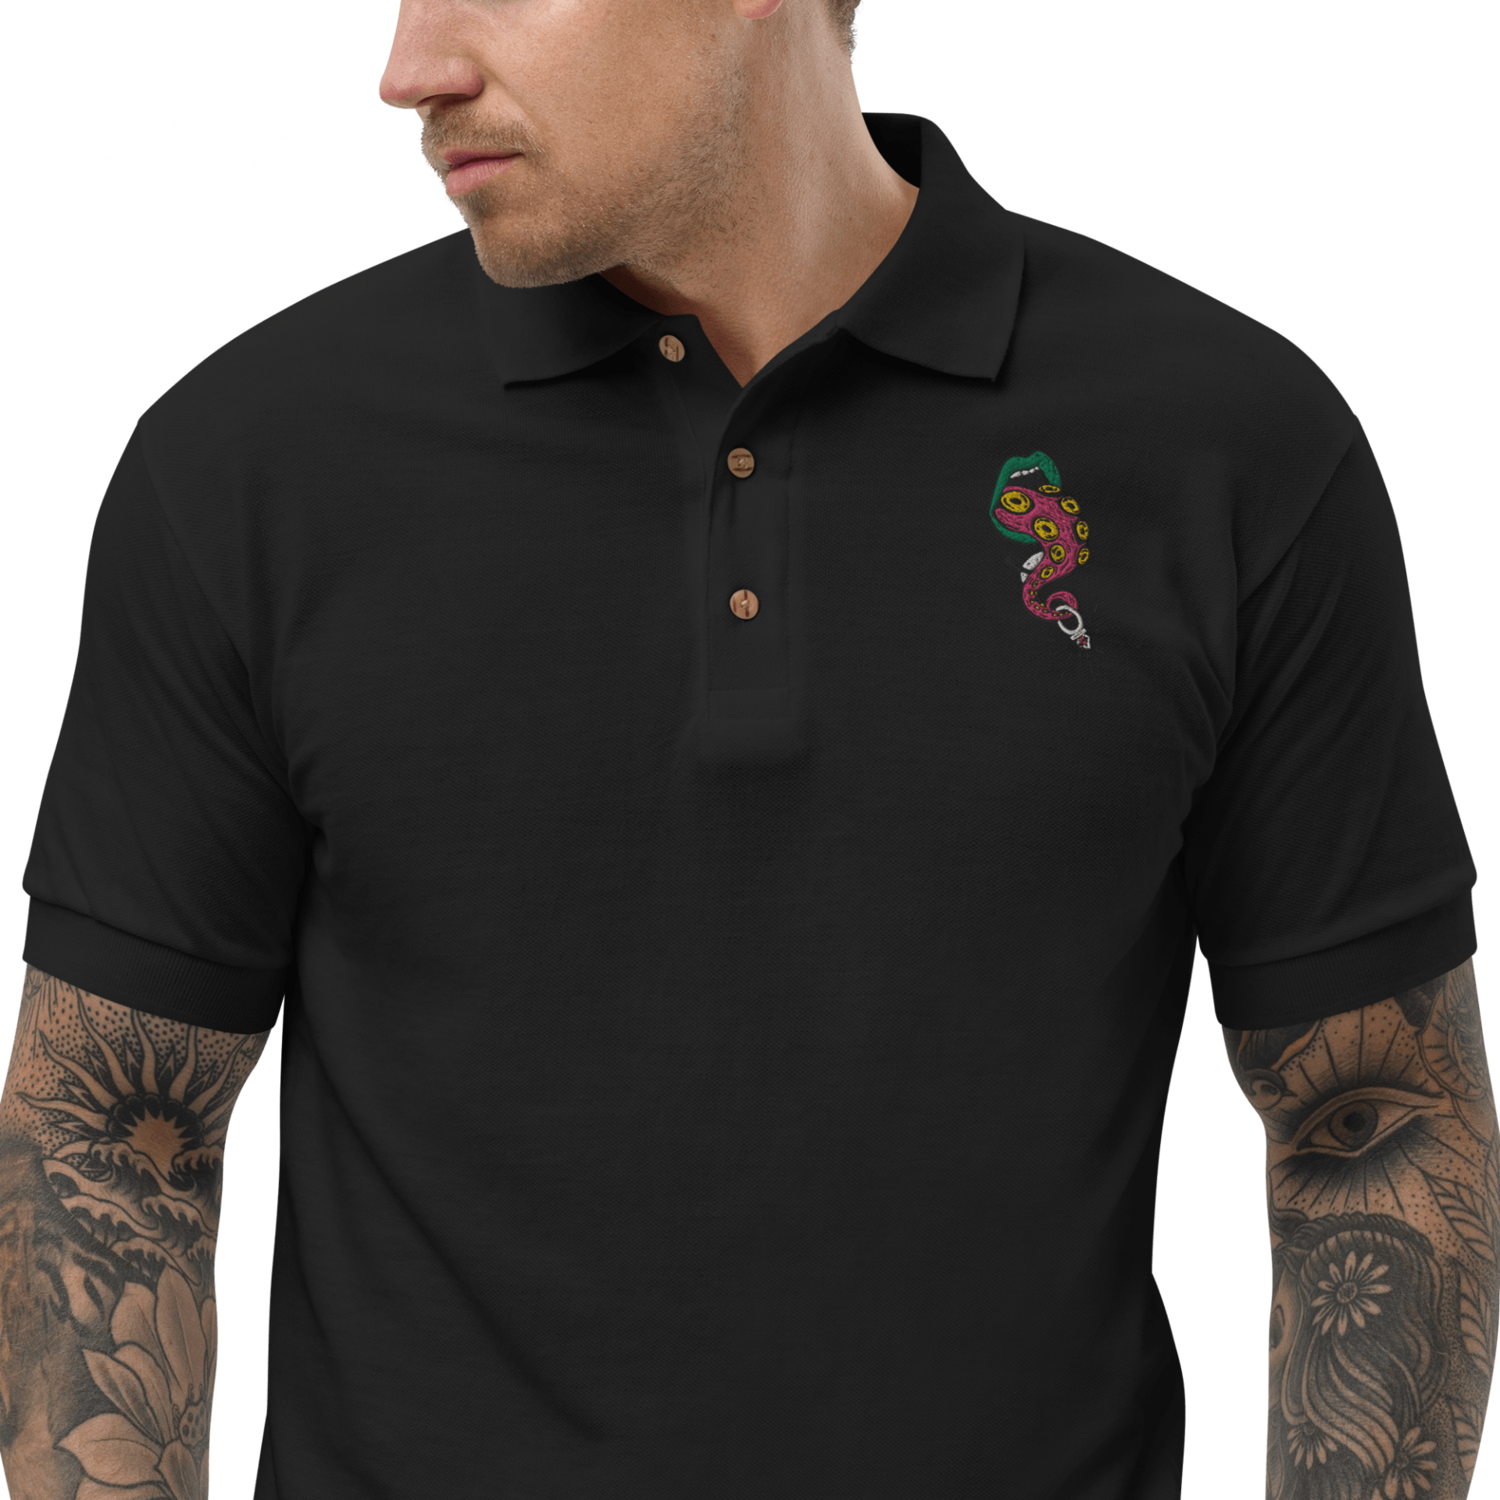 DTO Embroidered Polo Shirt - Black